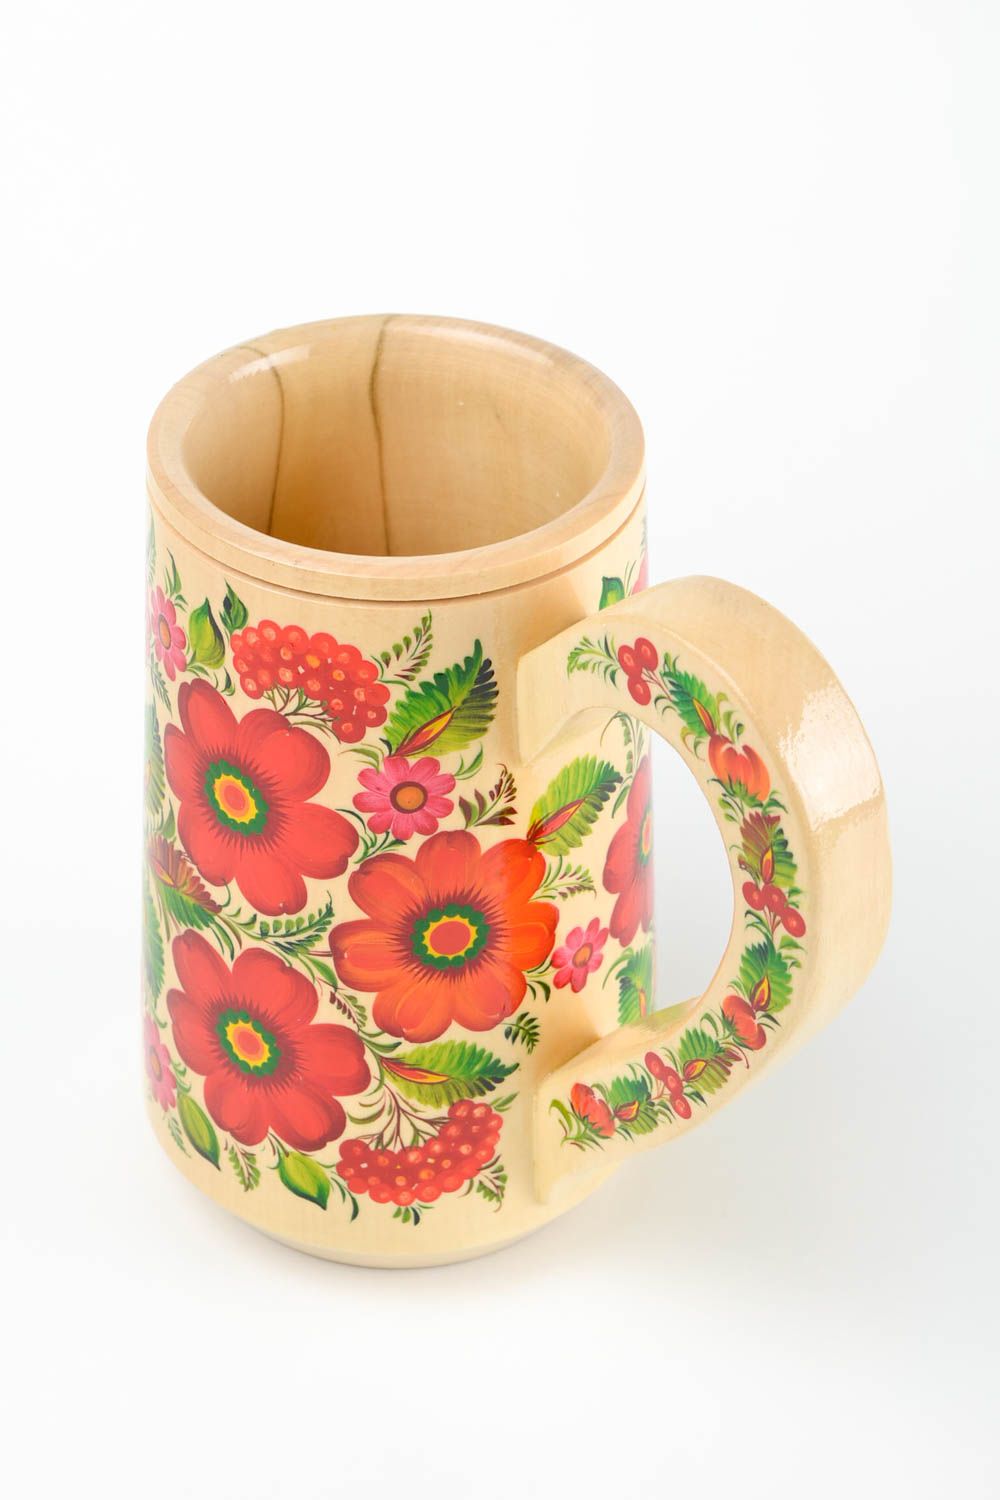 Handmade wooden mug designer glass unusual cup for kitchen decor gift ideas photo 5